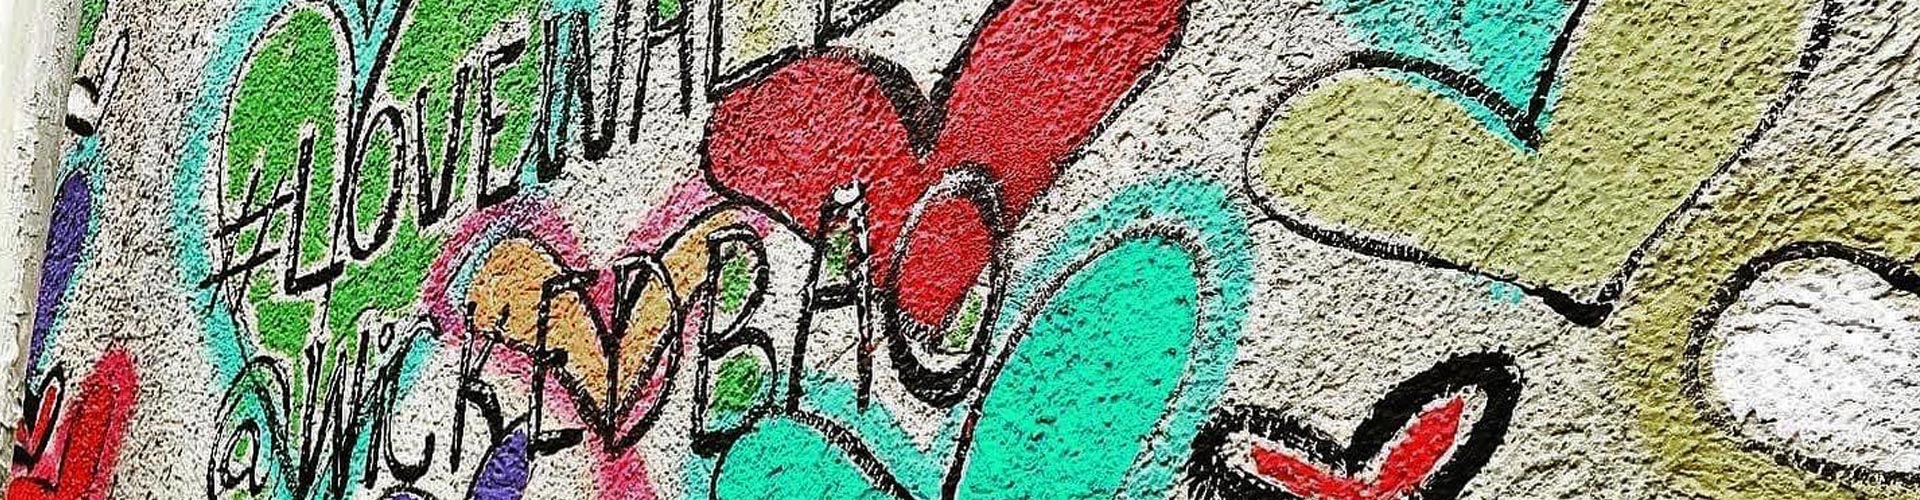 Love Wall at Wicked Bao